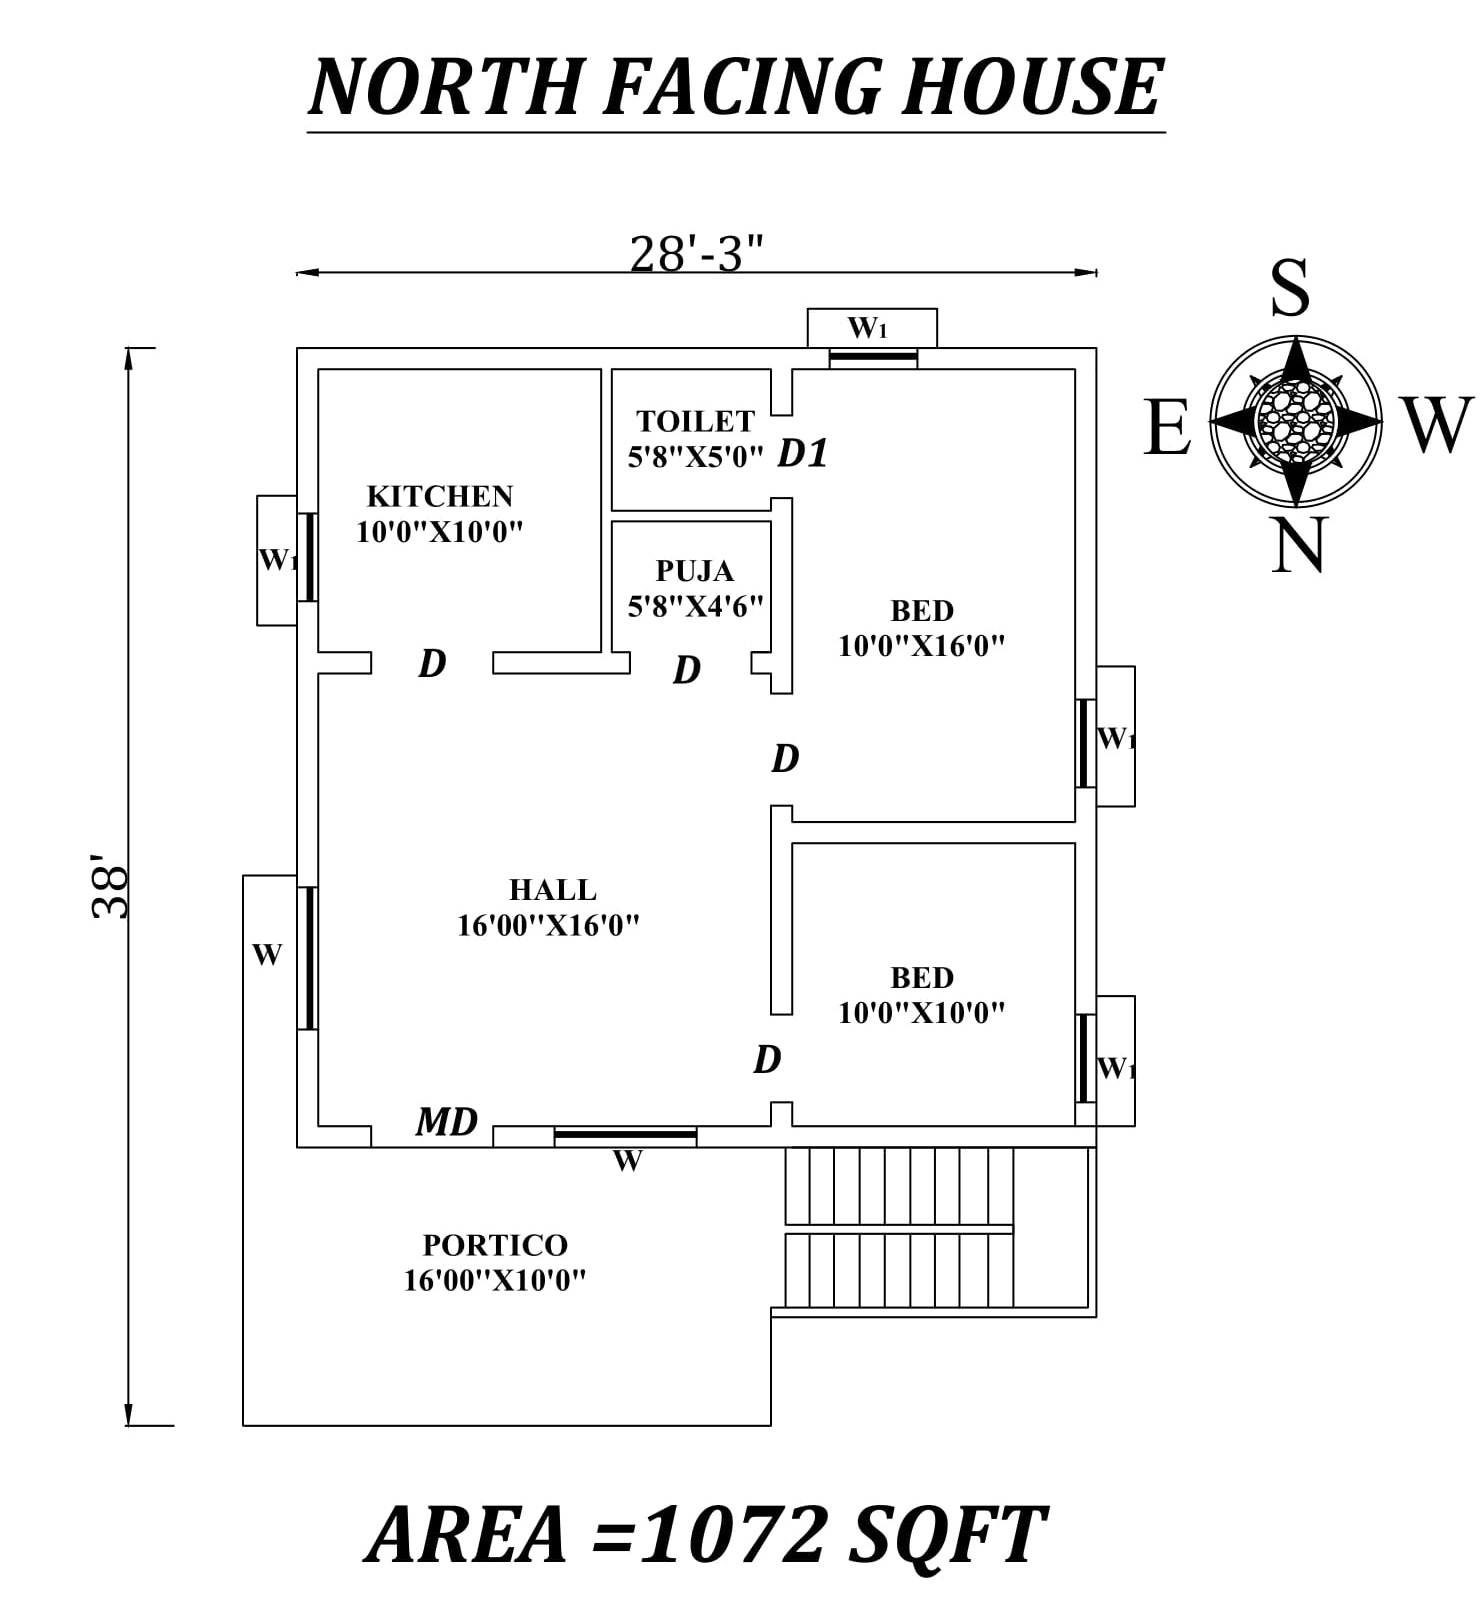 28'x38' Amazing North facing 2bhk house plan as per vastu Shastra ...